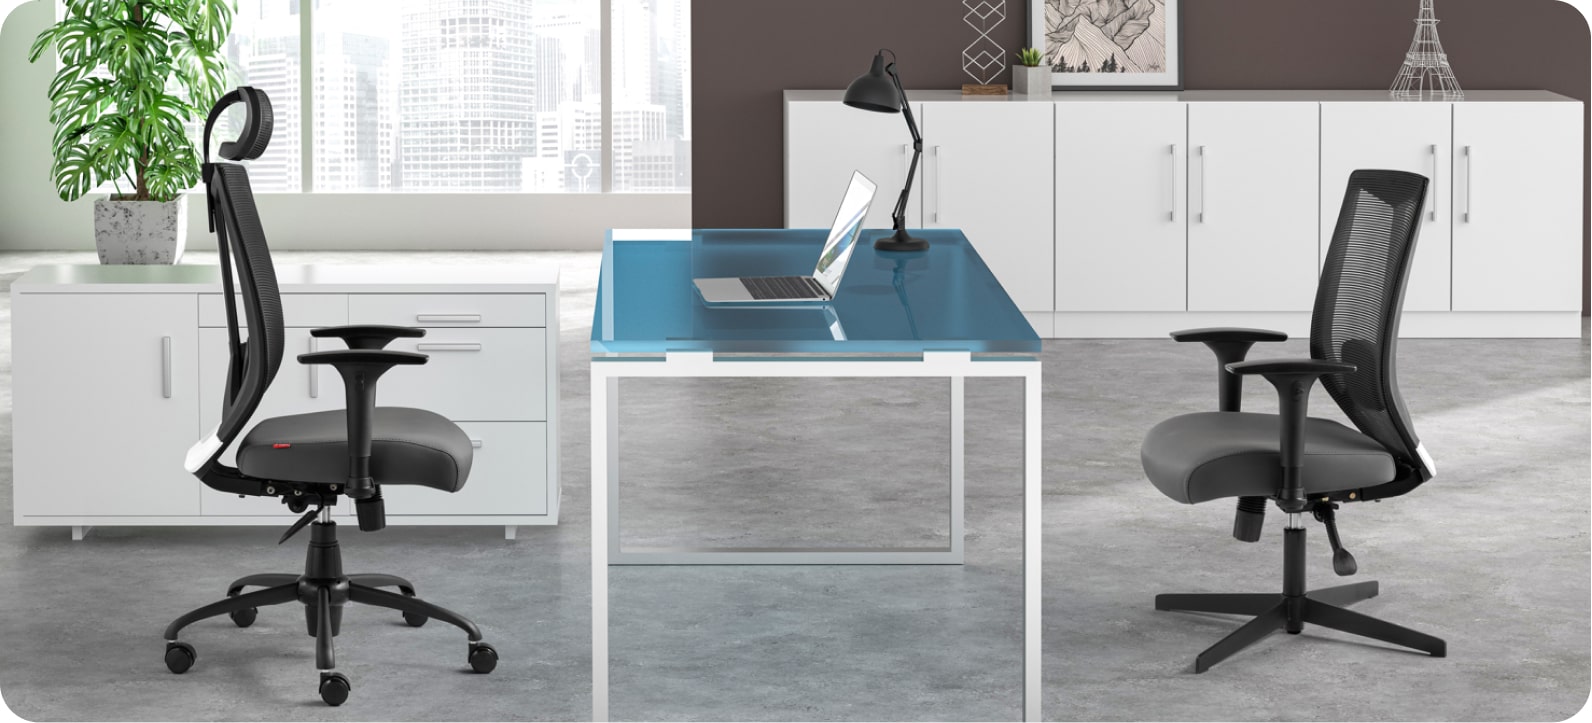 Office Furniture 1401-8-23-Cus 01-min